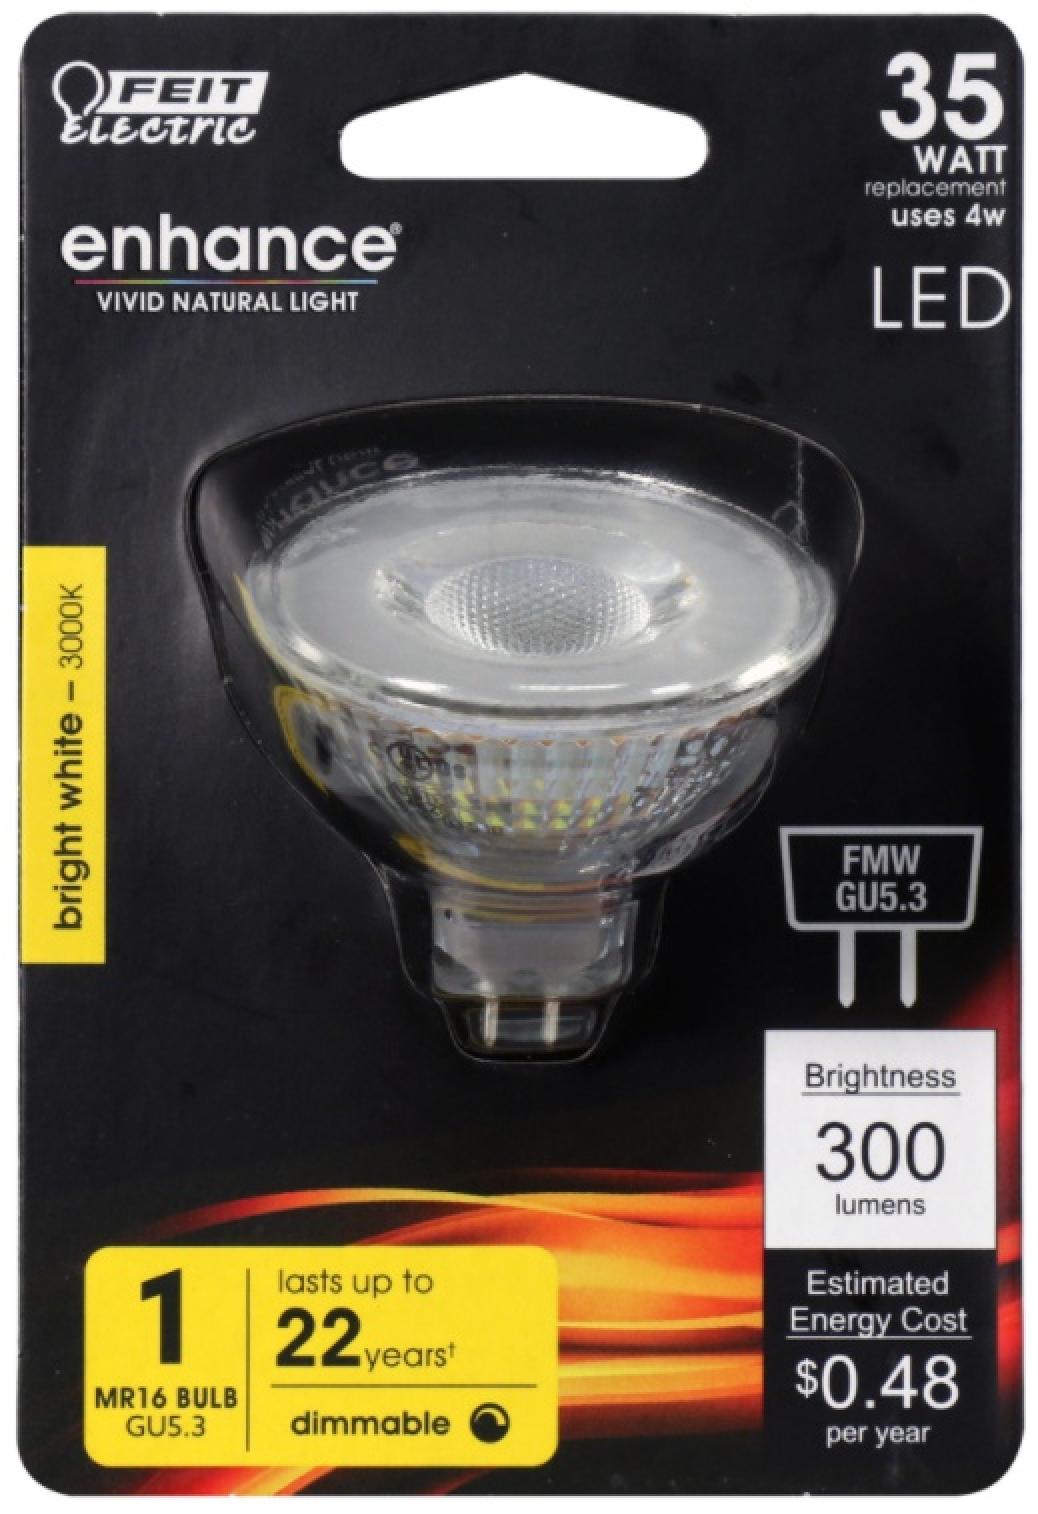 Feit Electric LED 35 Watt Equivalent 300 Lumens FMW GU5.3 MR16 Dimmable Light Bulb